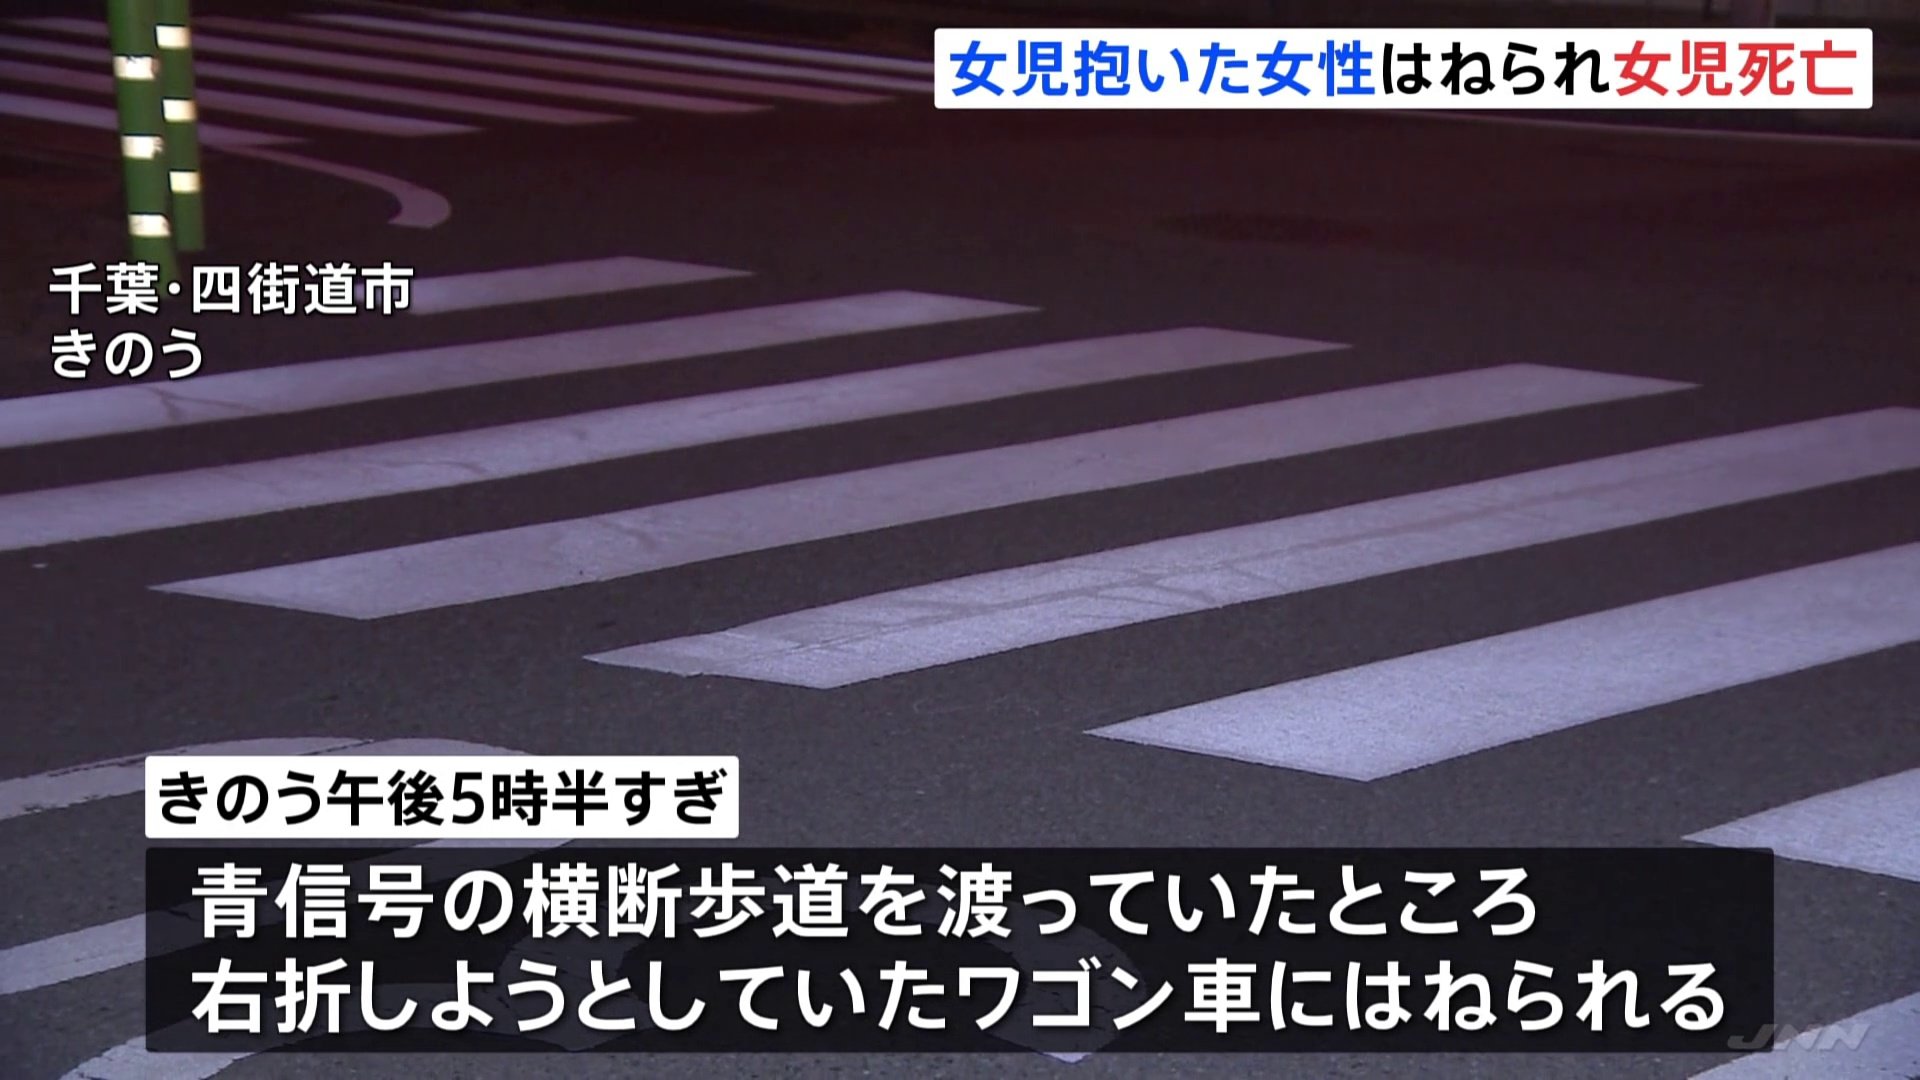 Re: [新聞] 日本千葉民眾被車撞1死1傷　台籍女駕駛被